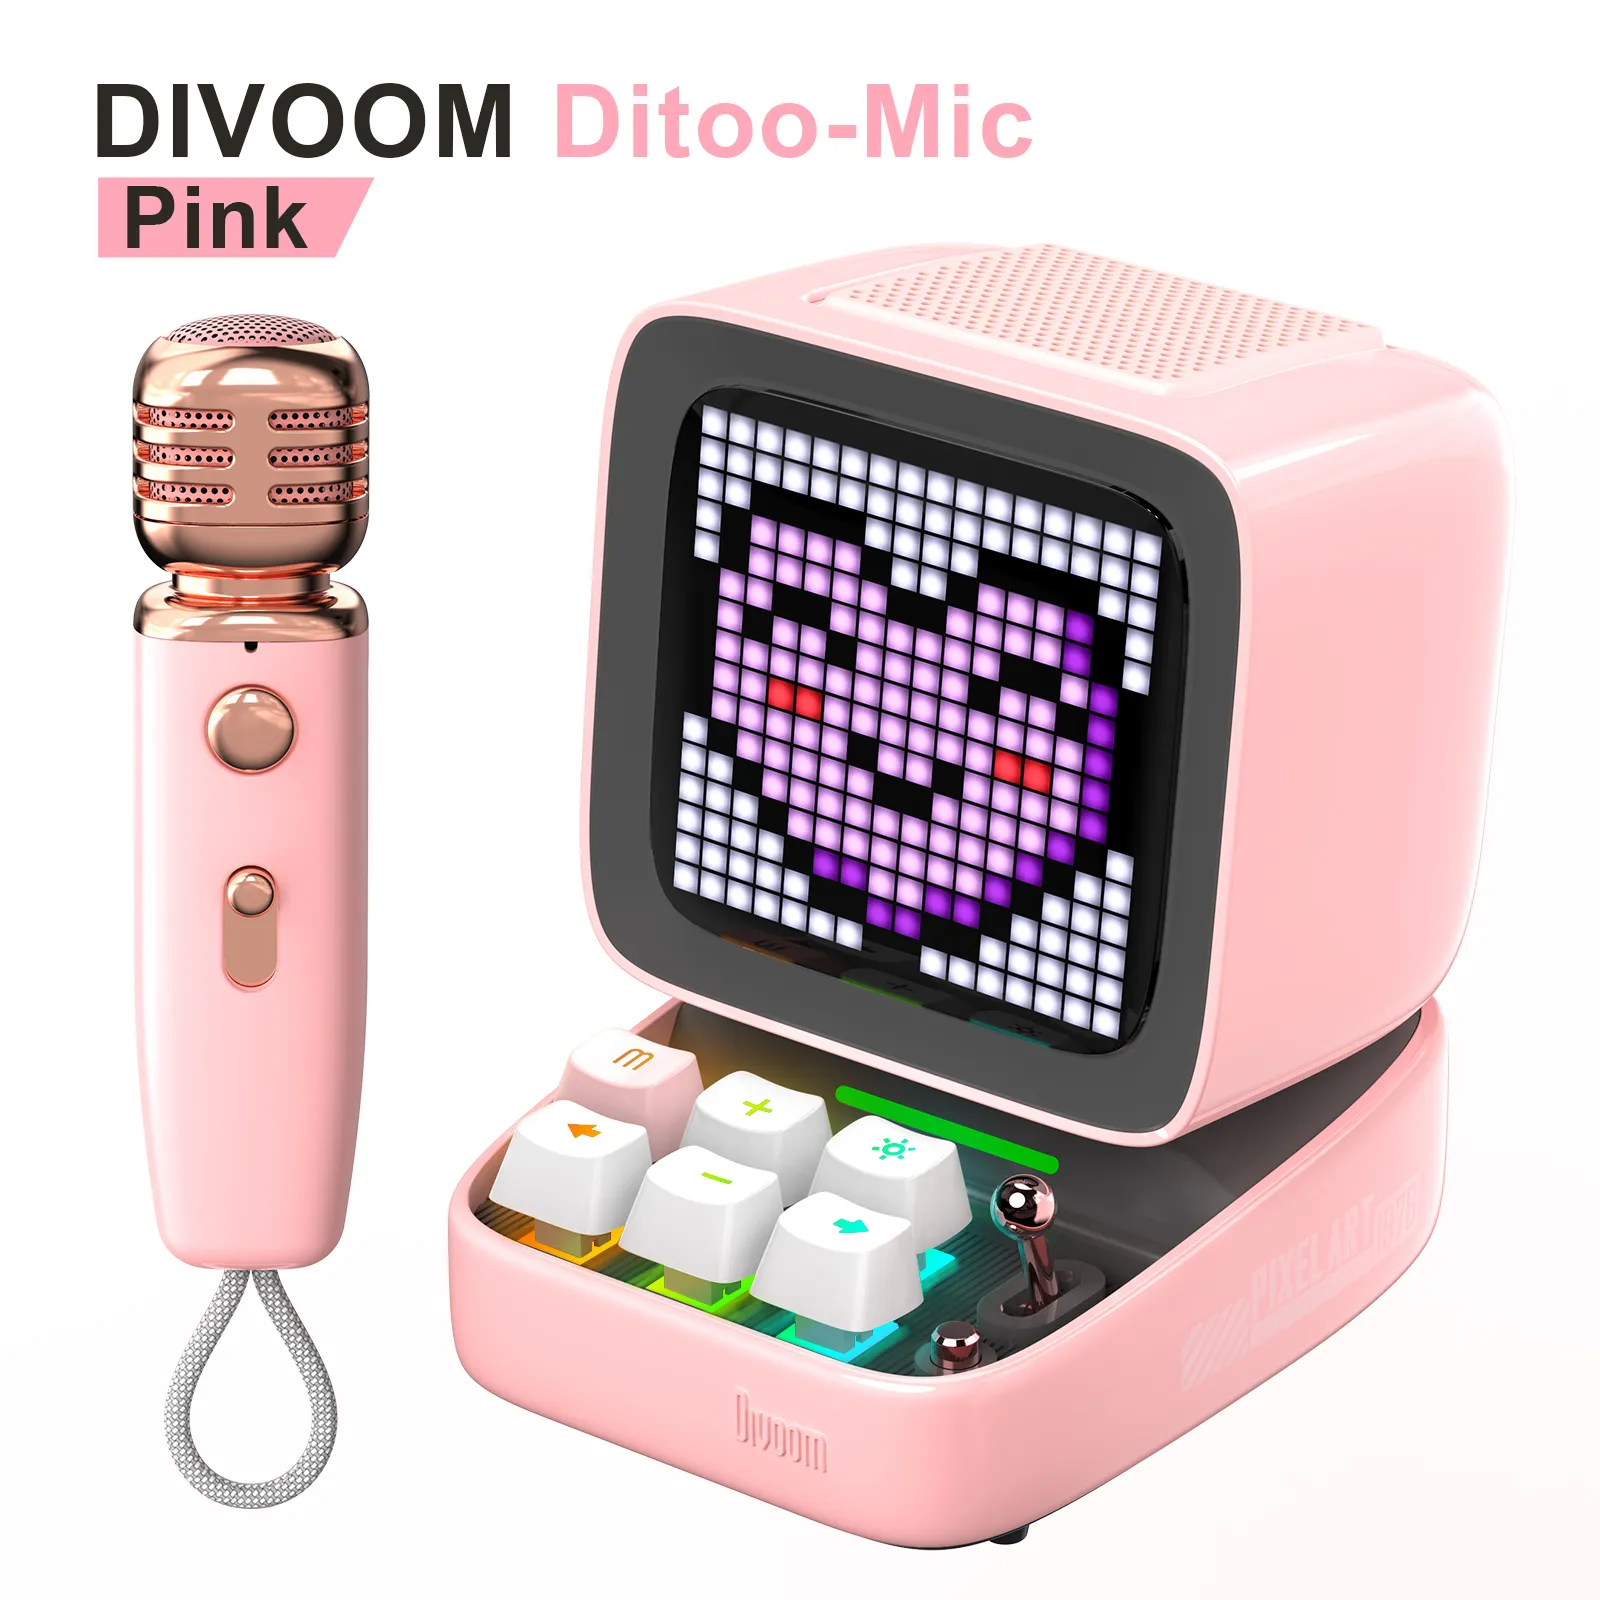 Divoom Ditoo Mic Pixel Art Enceinte Bluetooth Portable Pour PC